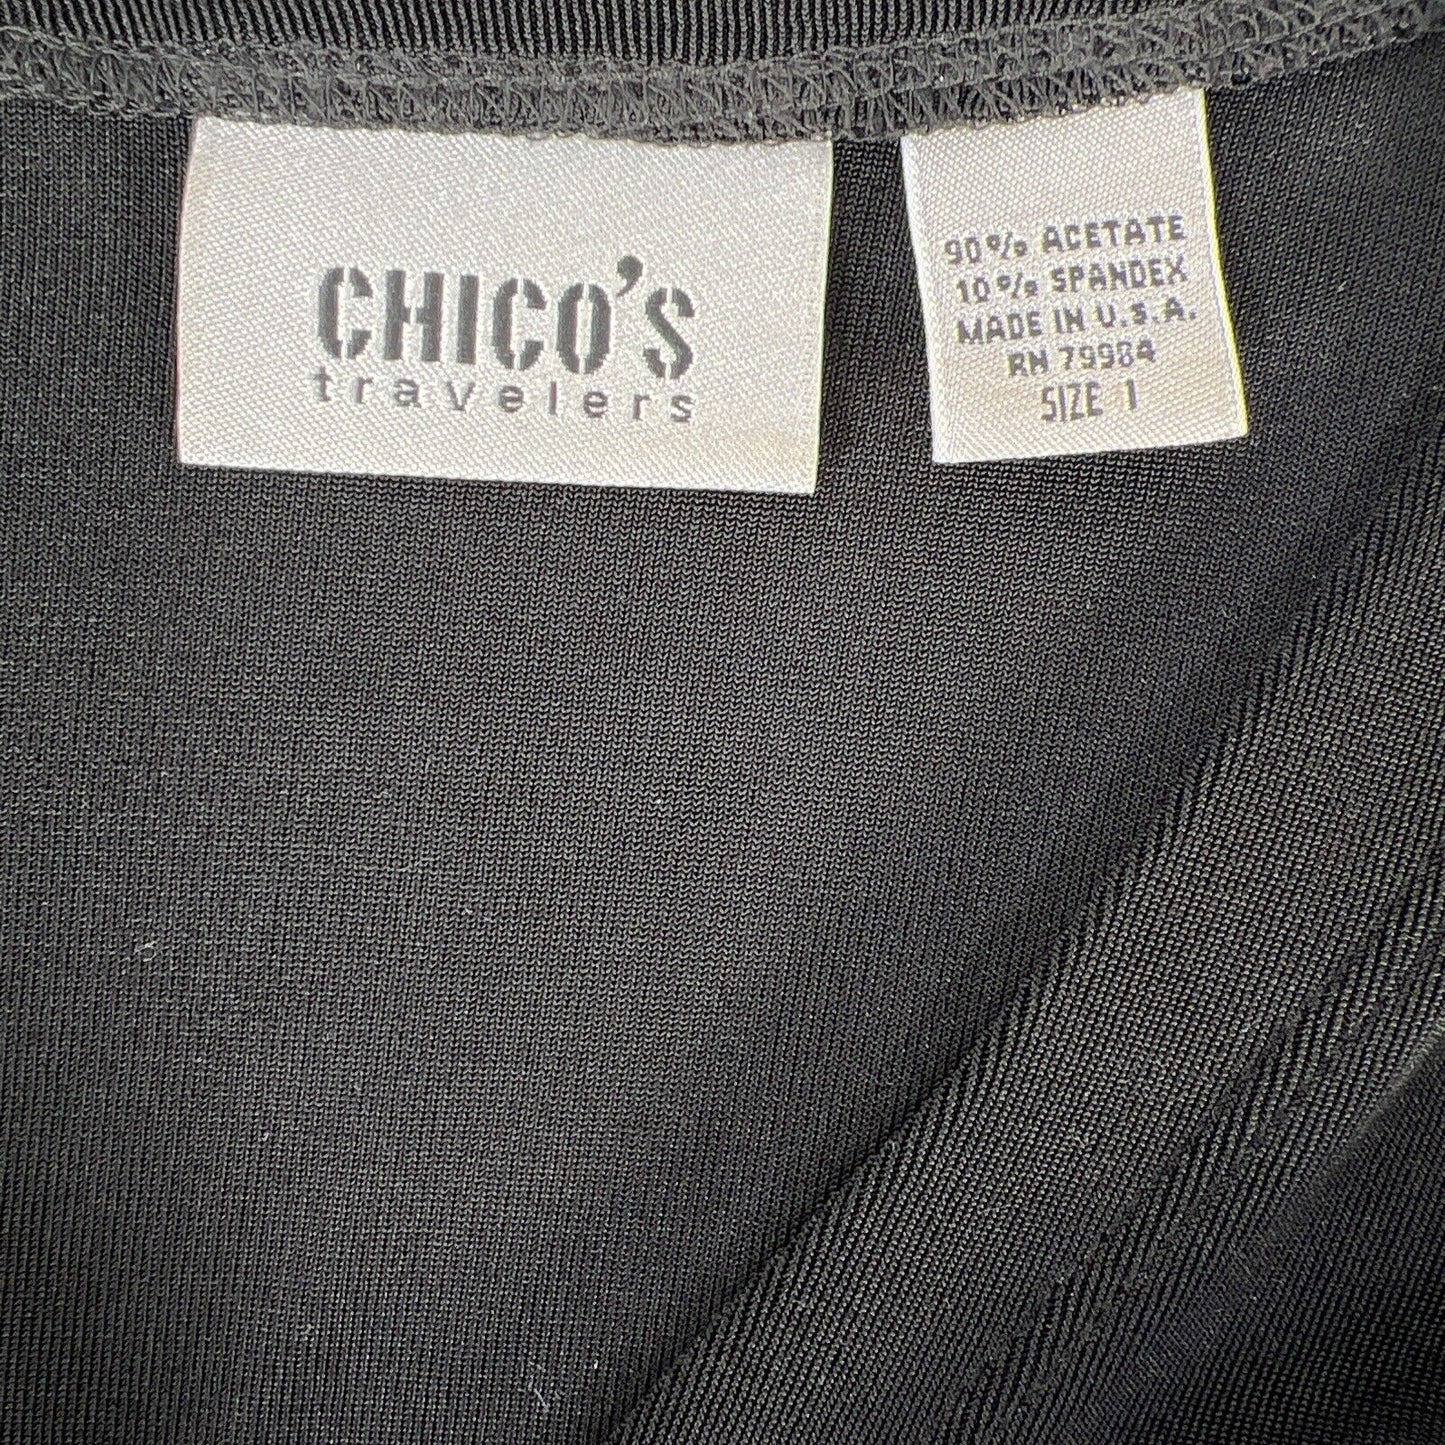 Chico's Traveler's Women's Black Button Up Cardigan Sweater - 1/M